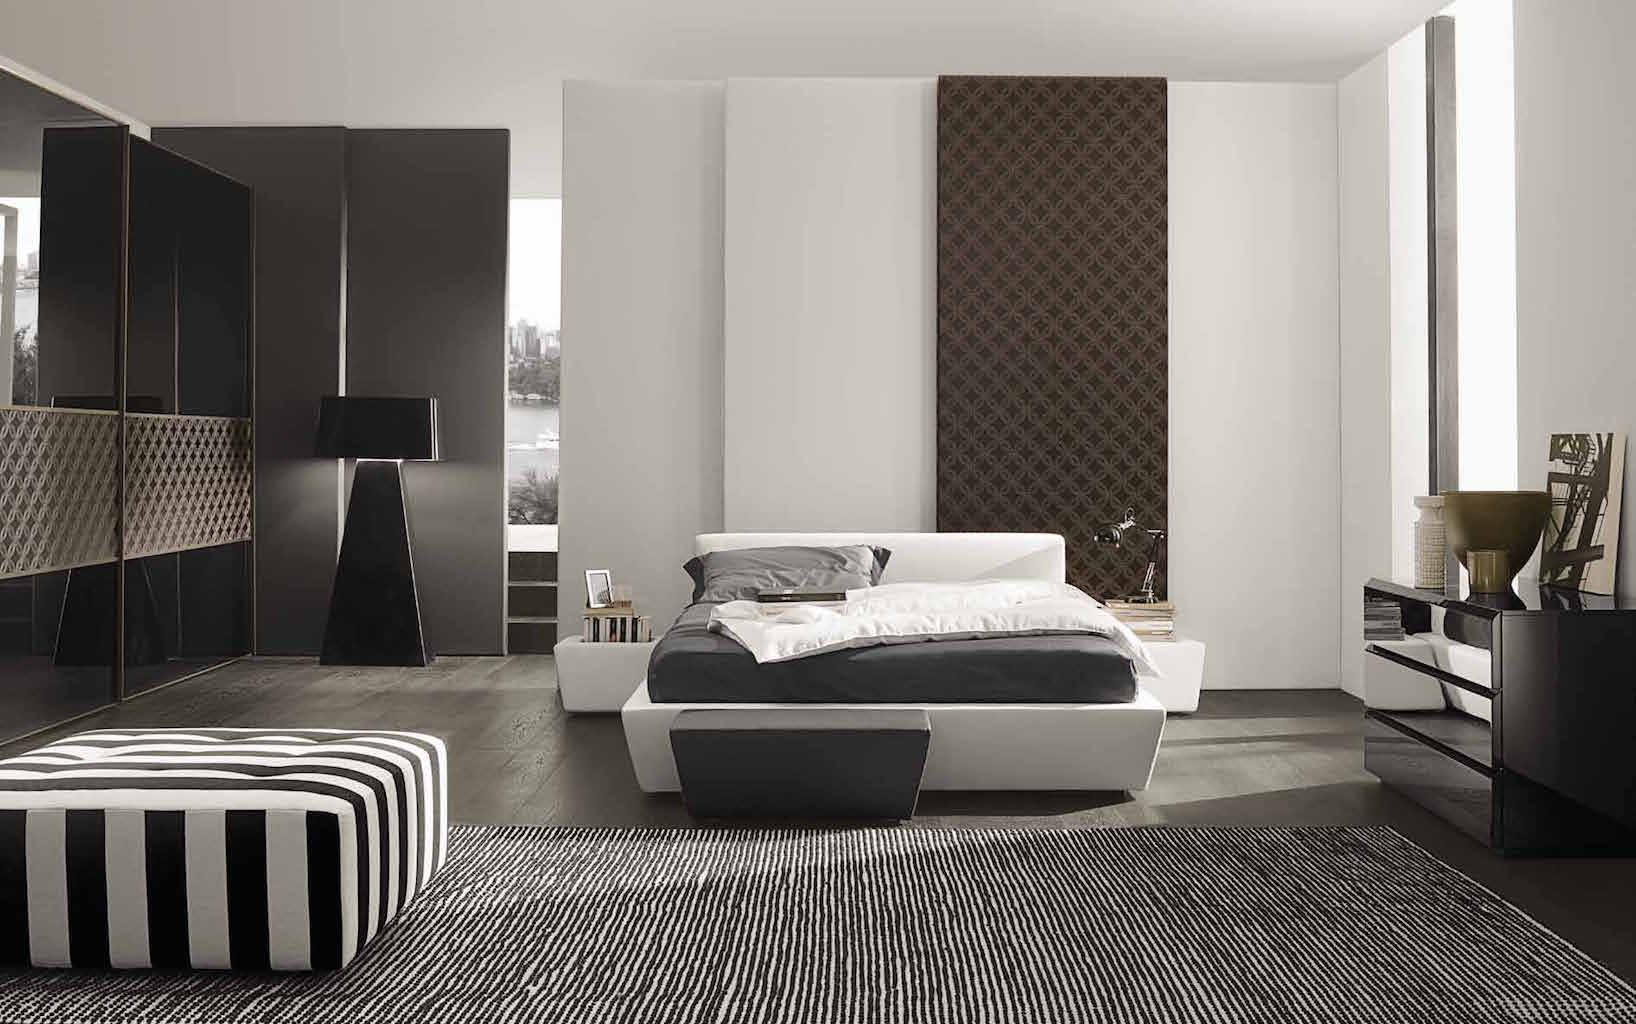 furniture-bed-room-in-modern-bedroom-ideas-guys-design-wardrobe-window-images-home-furniture-design-terrific-bedroom-design